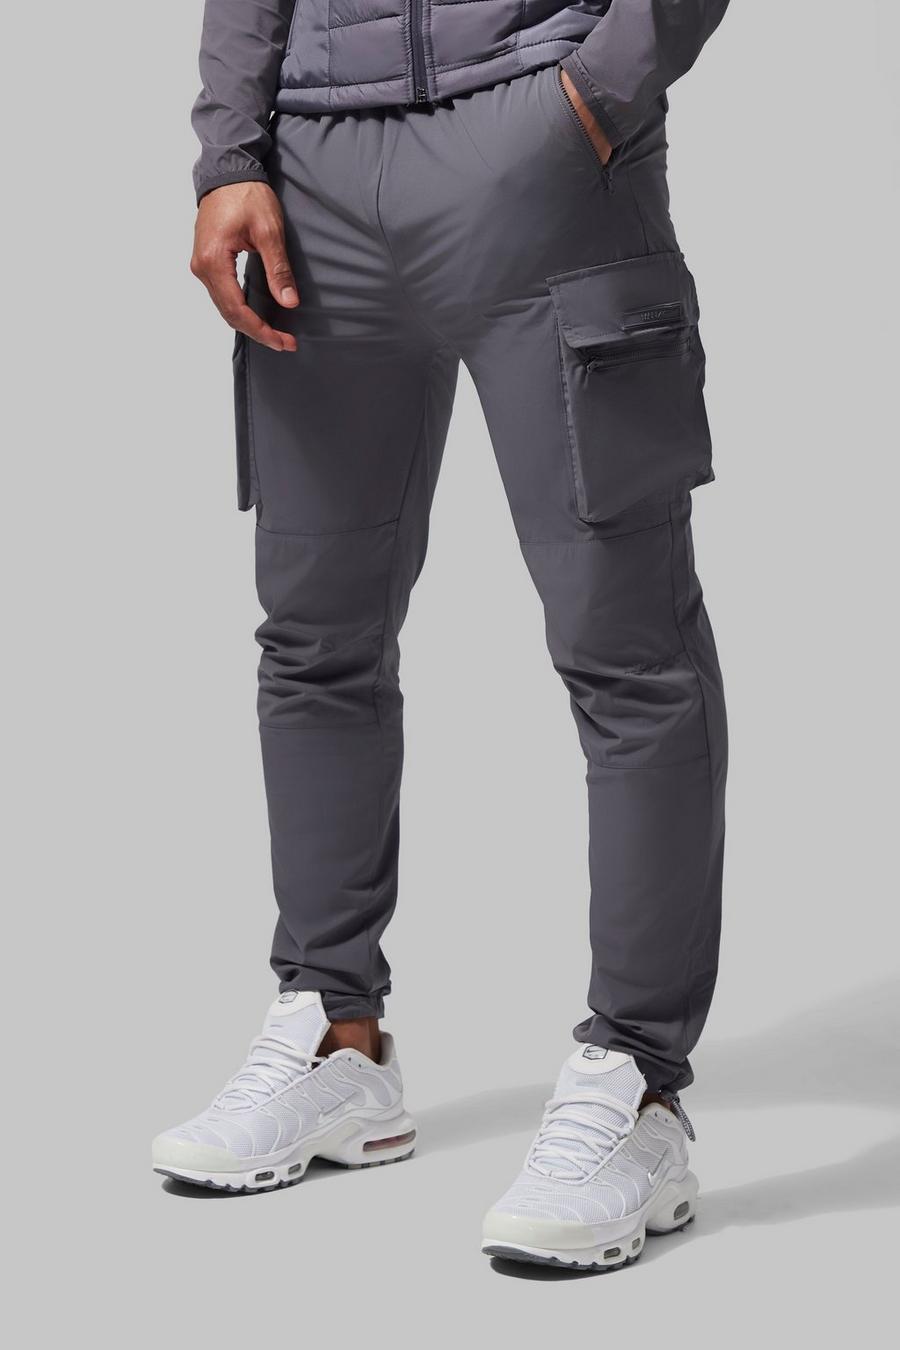 Charcoal grigio מכנסי ריצה דגמ'ח ספורטיביים קלילים עם כיתוב Man 